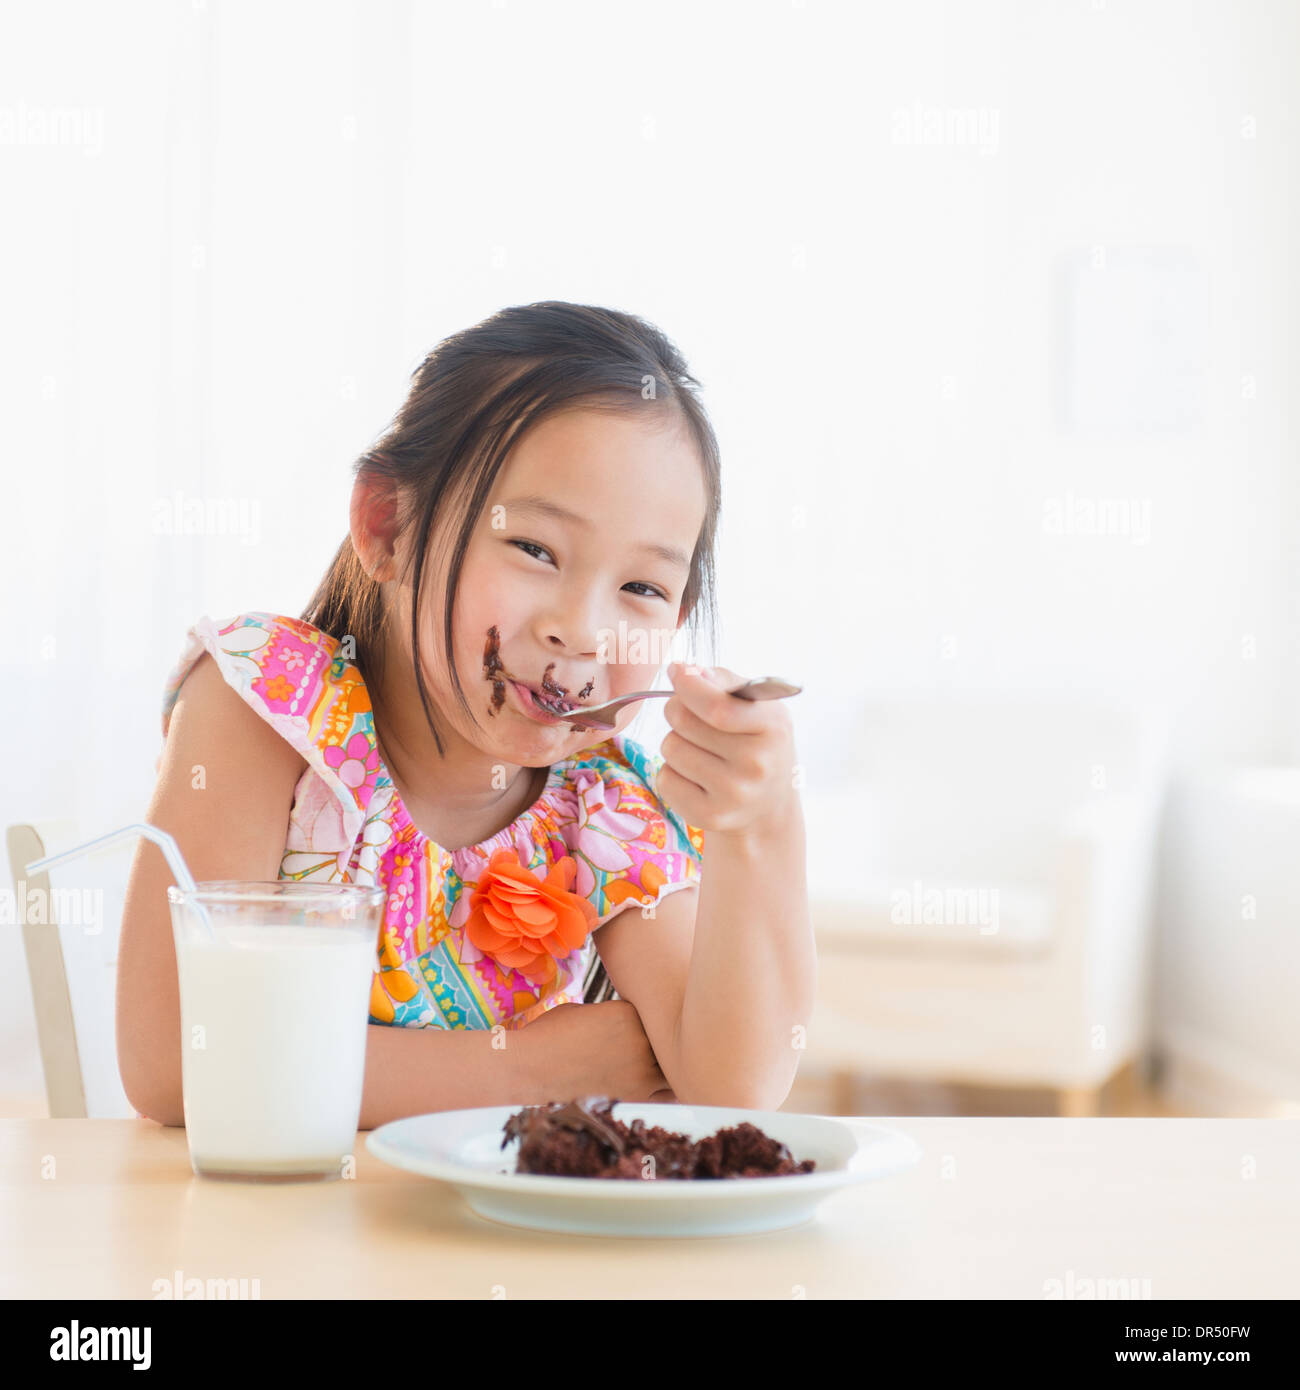 Korean girl eating slice of chocolate cake Stock Photo